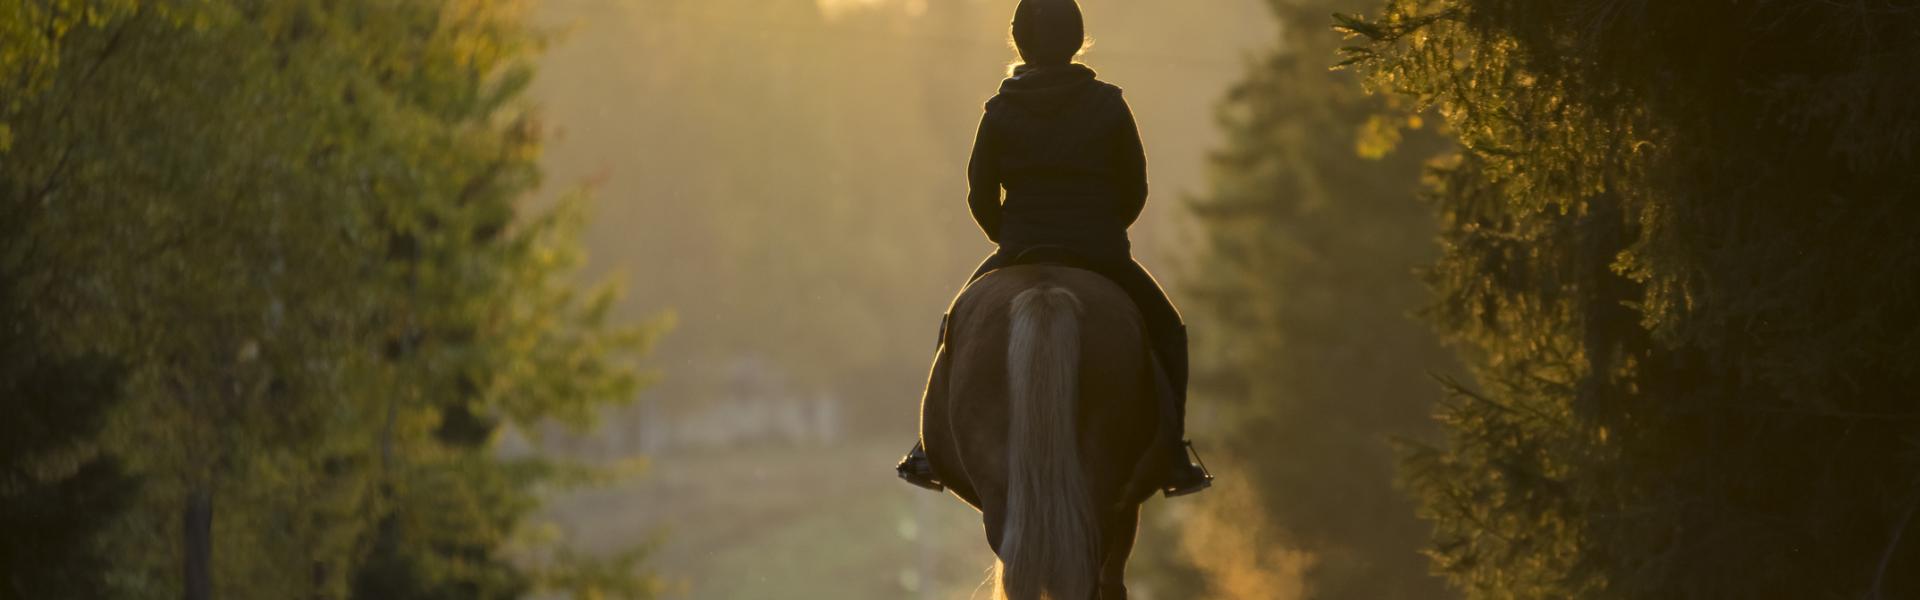 Horse Riding Holidays in the UK - HomeToGo